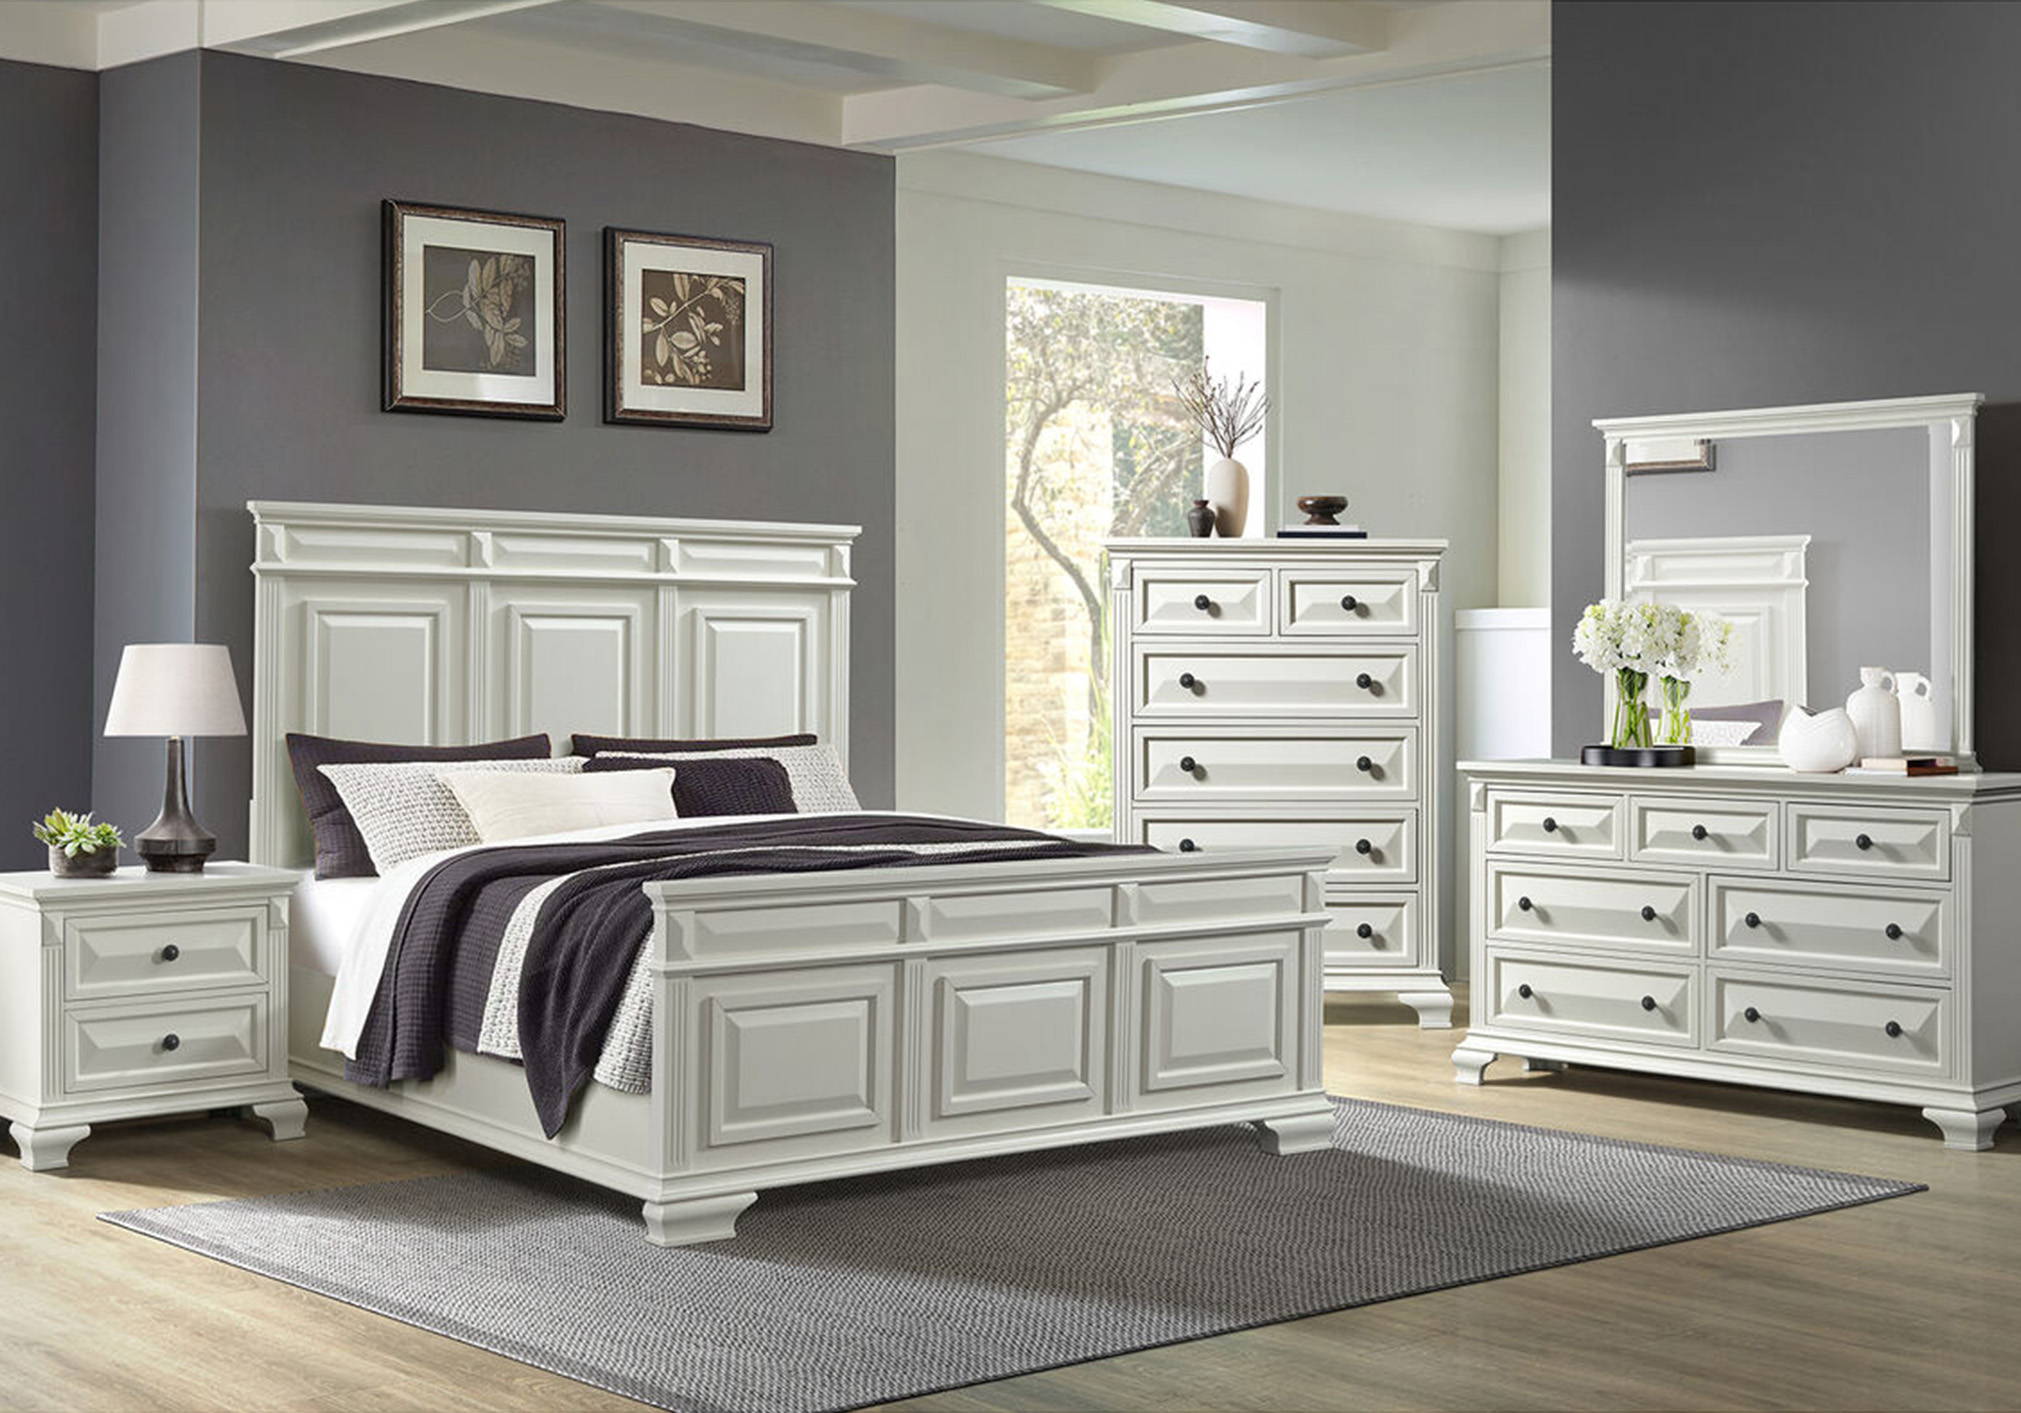 Elegant rustic brown bedroom set. Click to Shop more bedroom options. 